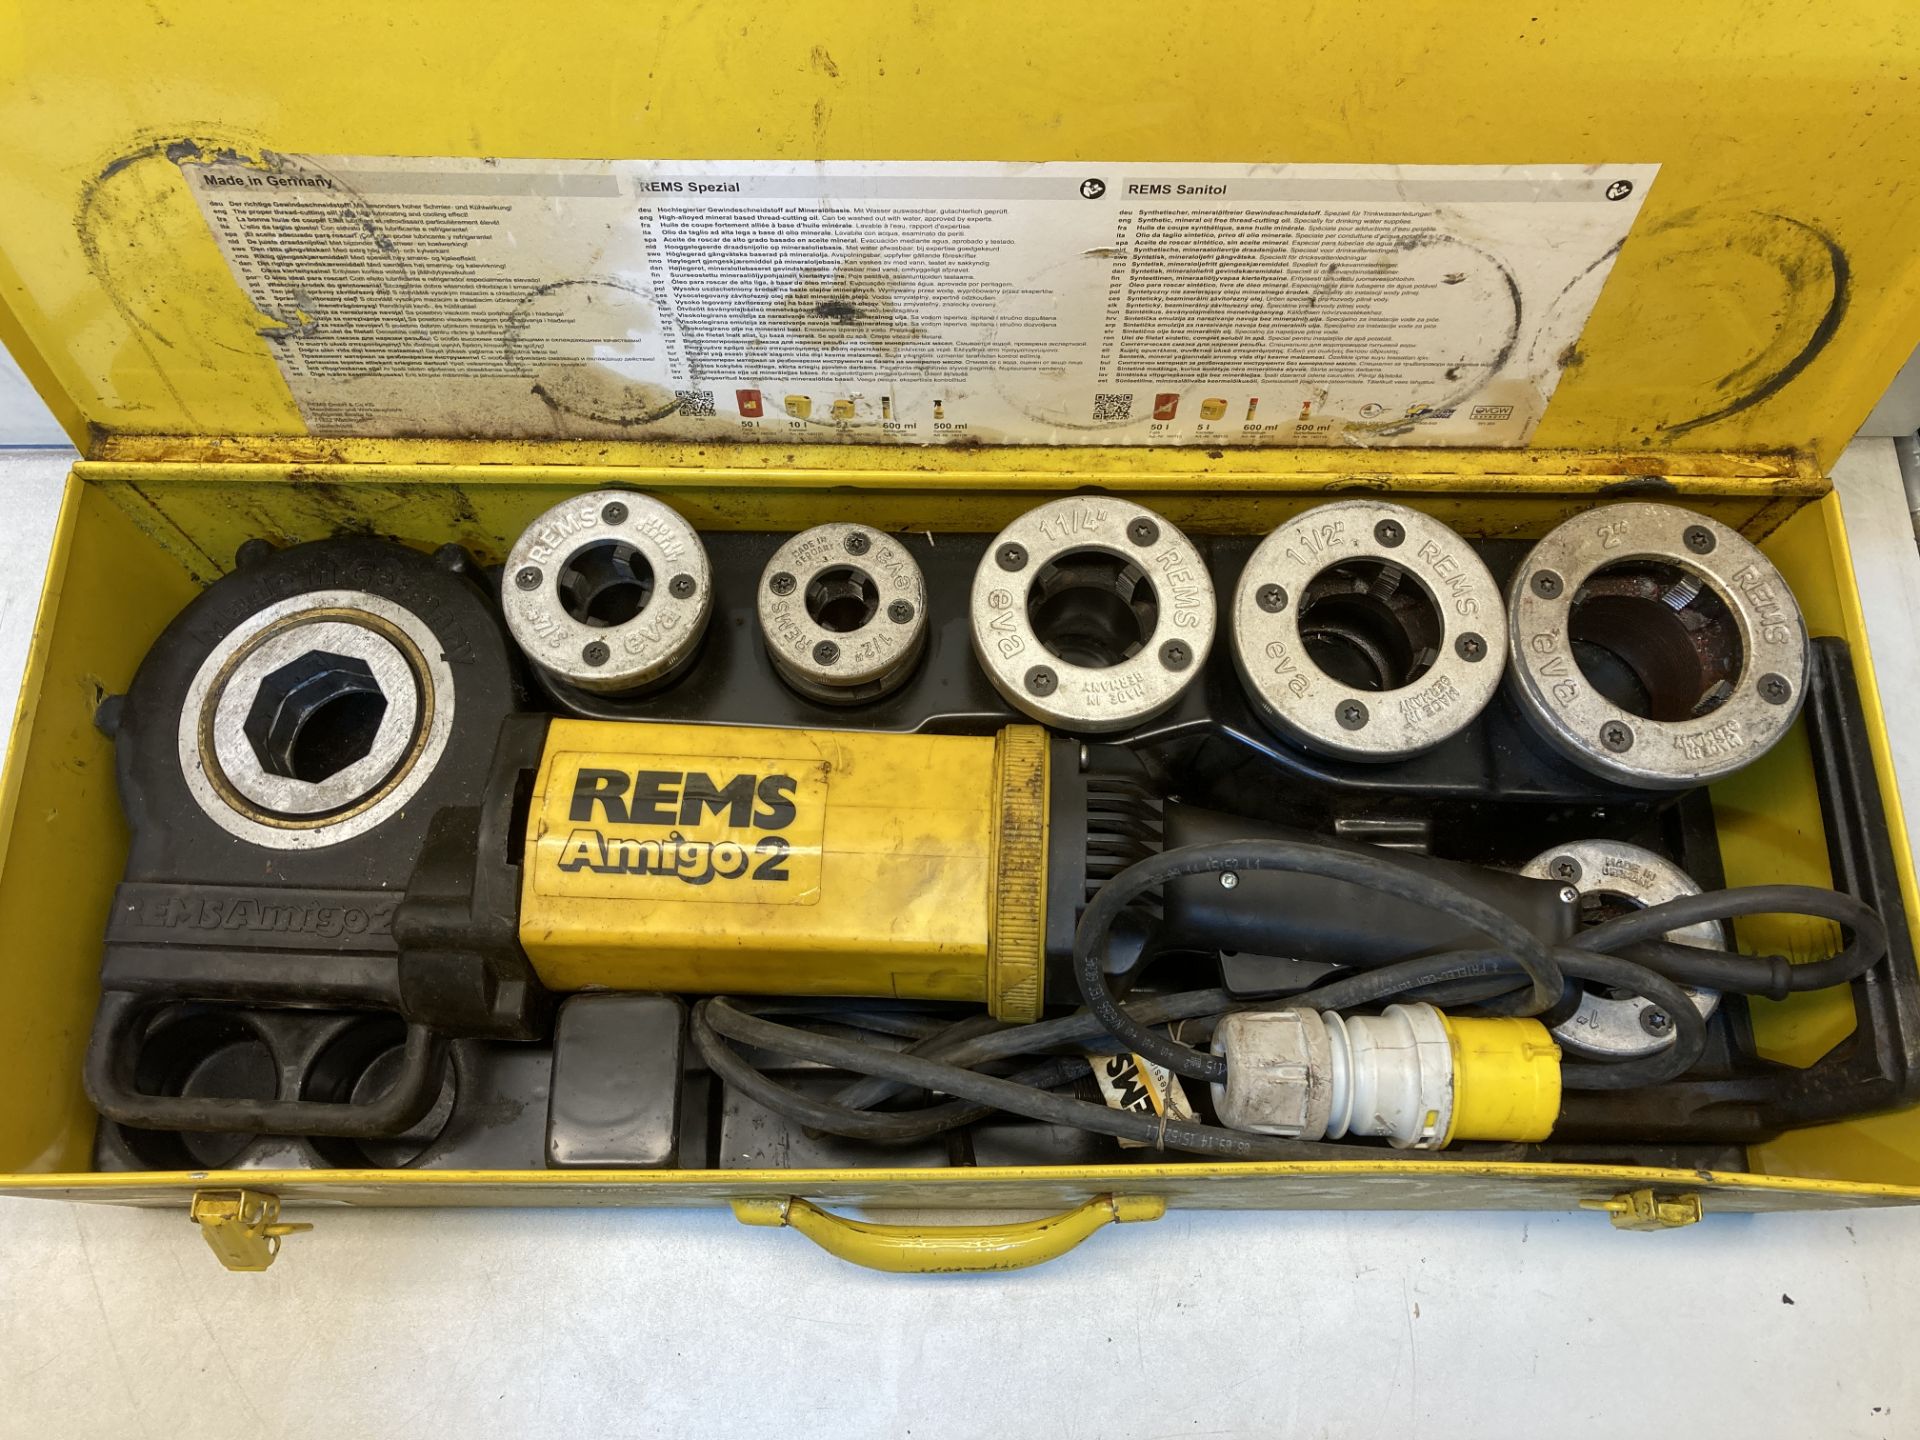 REMS Amigo 2 Thread Cutting Machine W/ Carry Case & 5 x Imperial Thread Cutters - Image 2 of 5